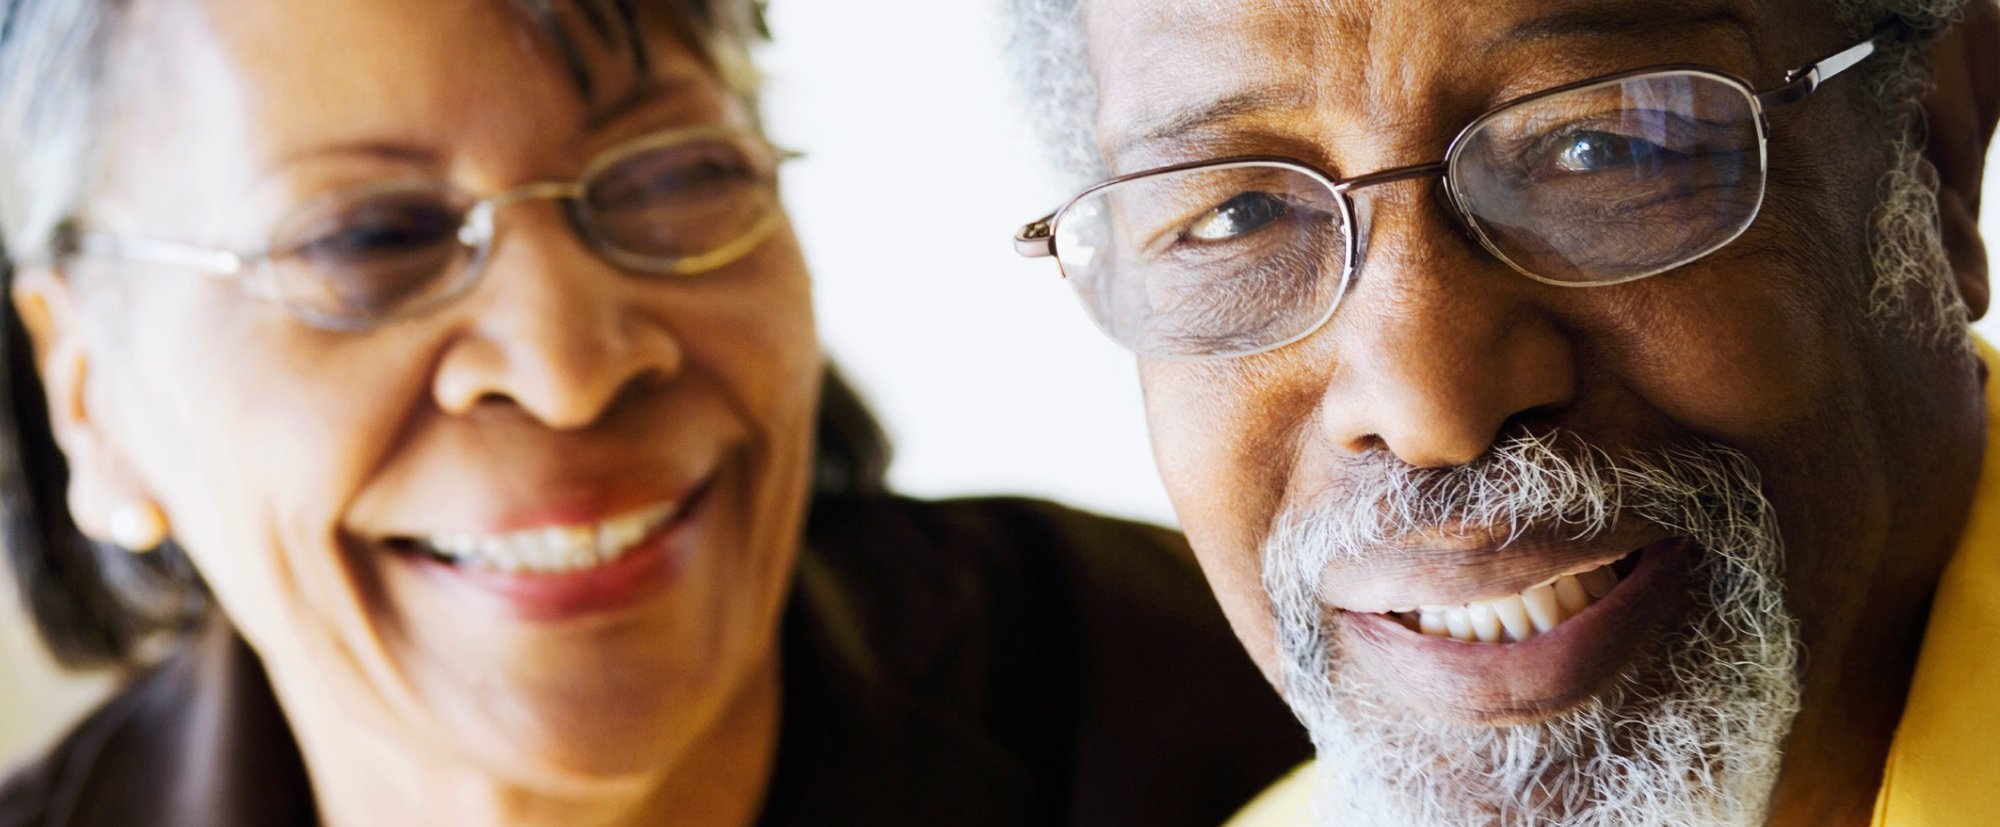 Close-up of senior man and woman, both wearing glasses